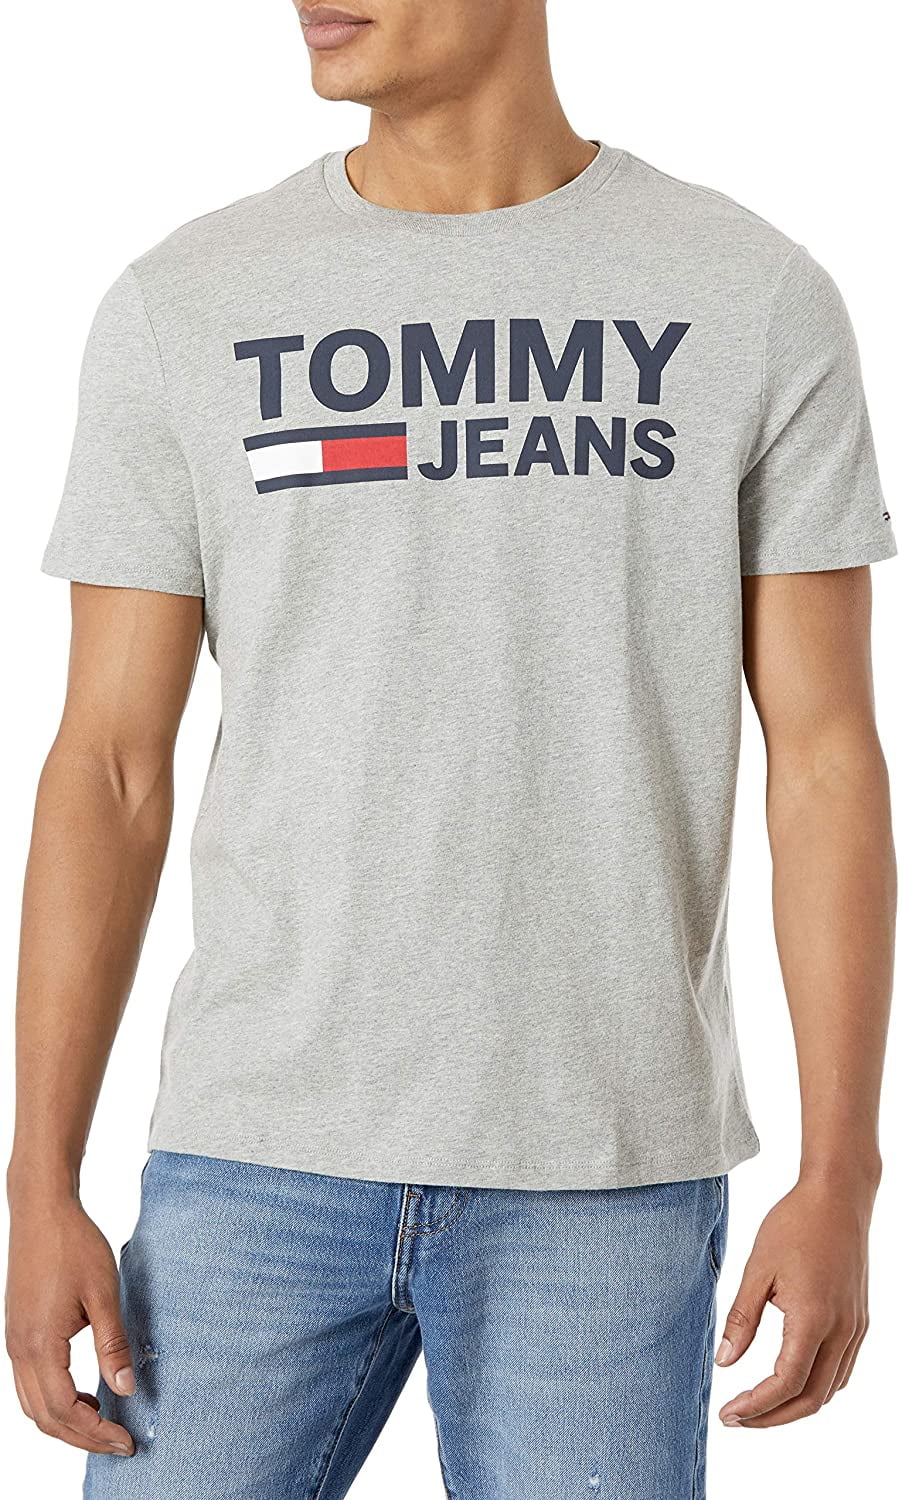 Tommy Hilfiger Mens Short Sleeve Graphic T-Shirt Medium B10 Grey - Walmart.com